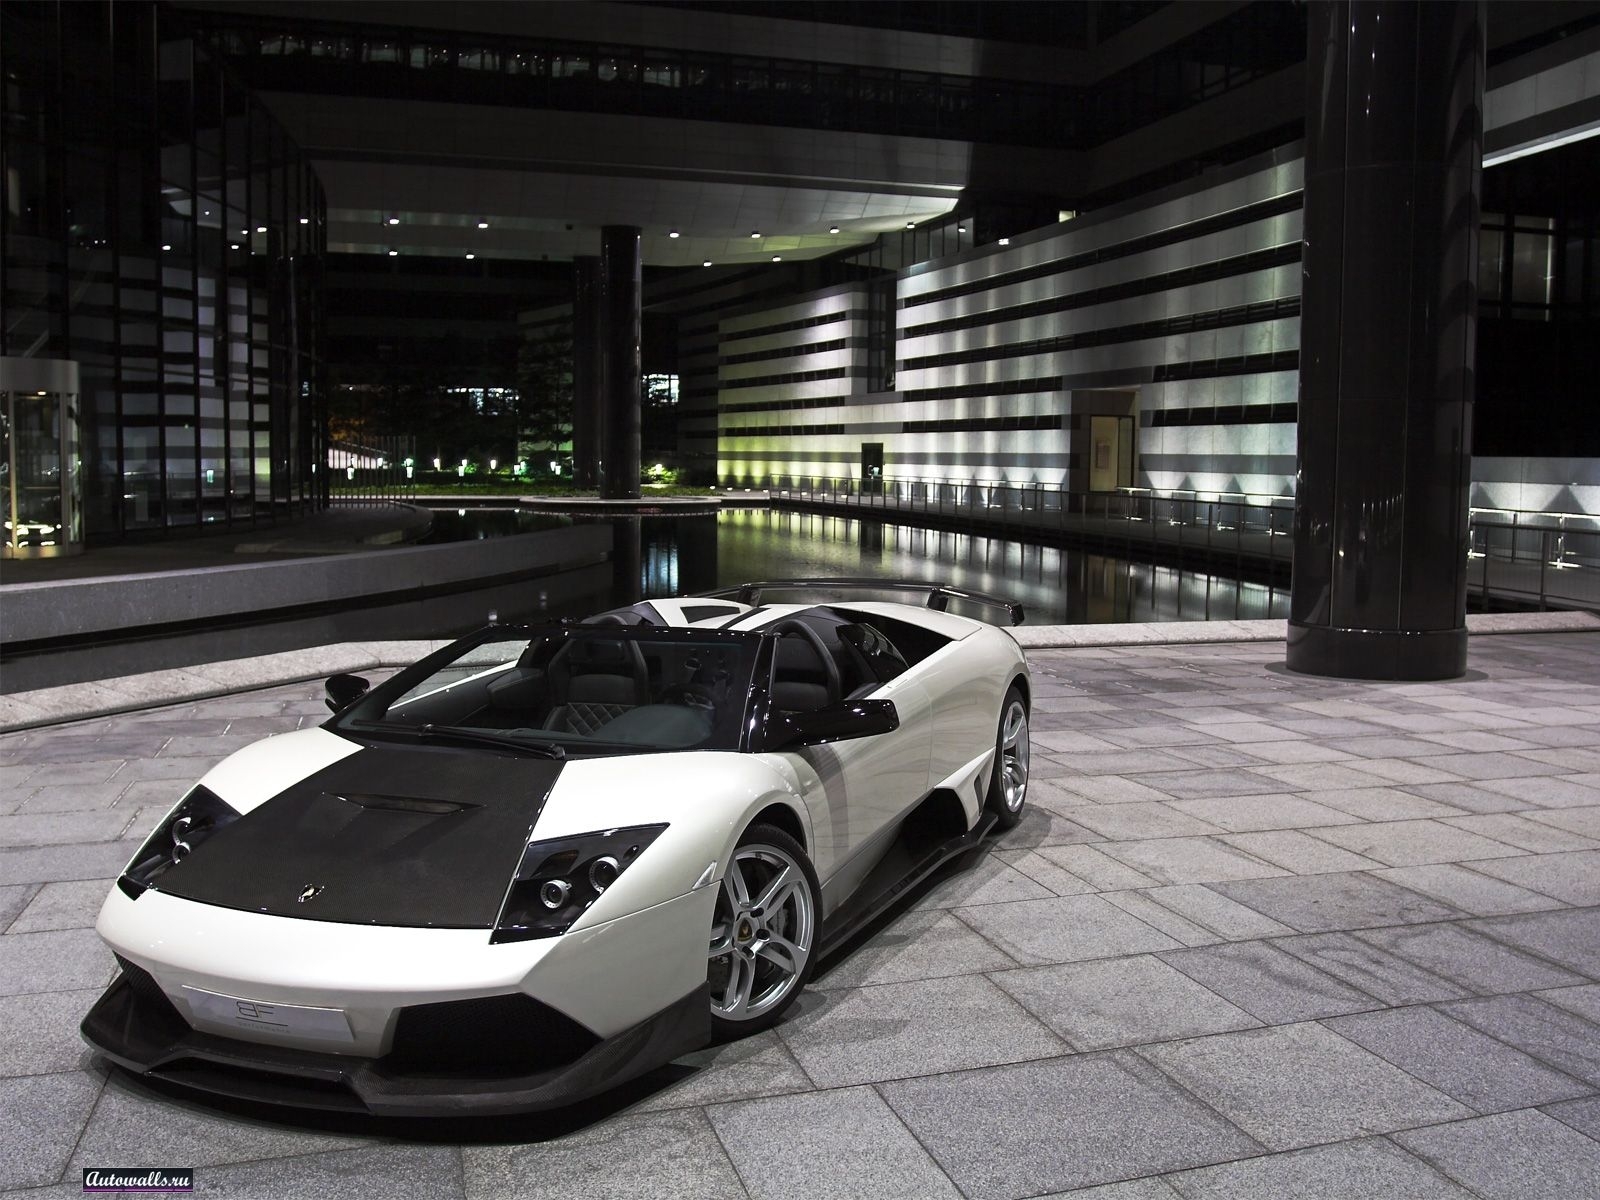 2782 Заставки и Обои Ламборджини (Lamborghini) на телефон. Скачать транспорт, машины картинки бесплатно